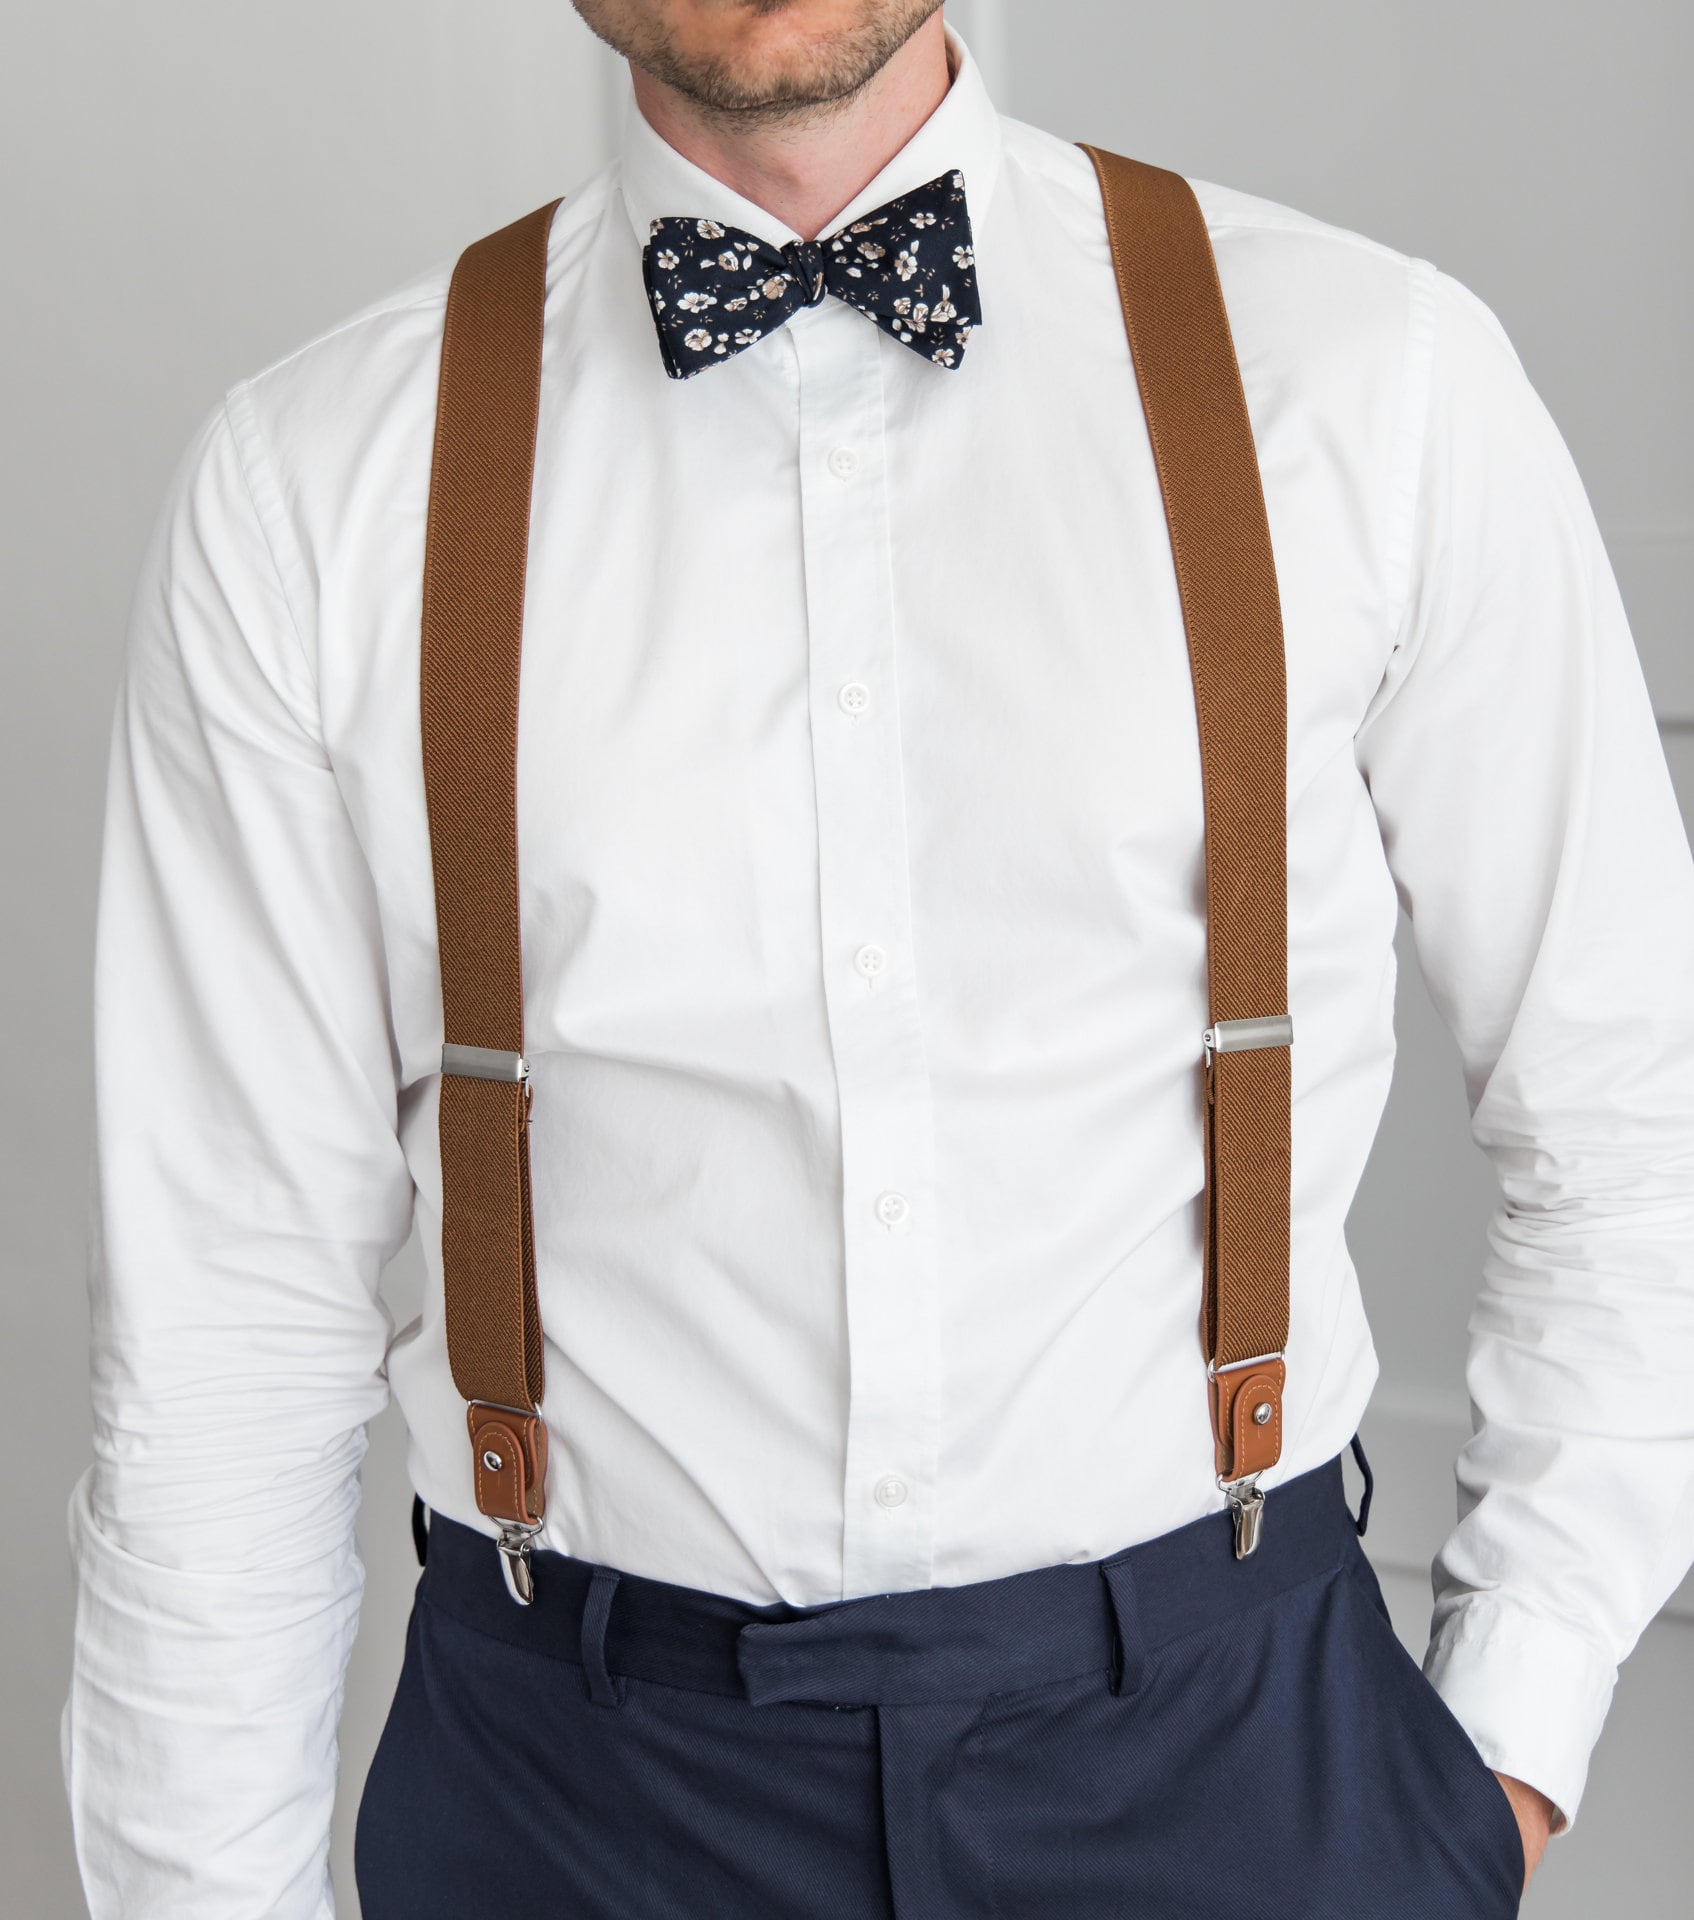 YCKYIGO Mens Suspenders,Brown Leather Button Tab and Clip Braces Heavy Duty Suspender Wedding Suspenders for Groom Groomsmen